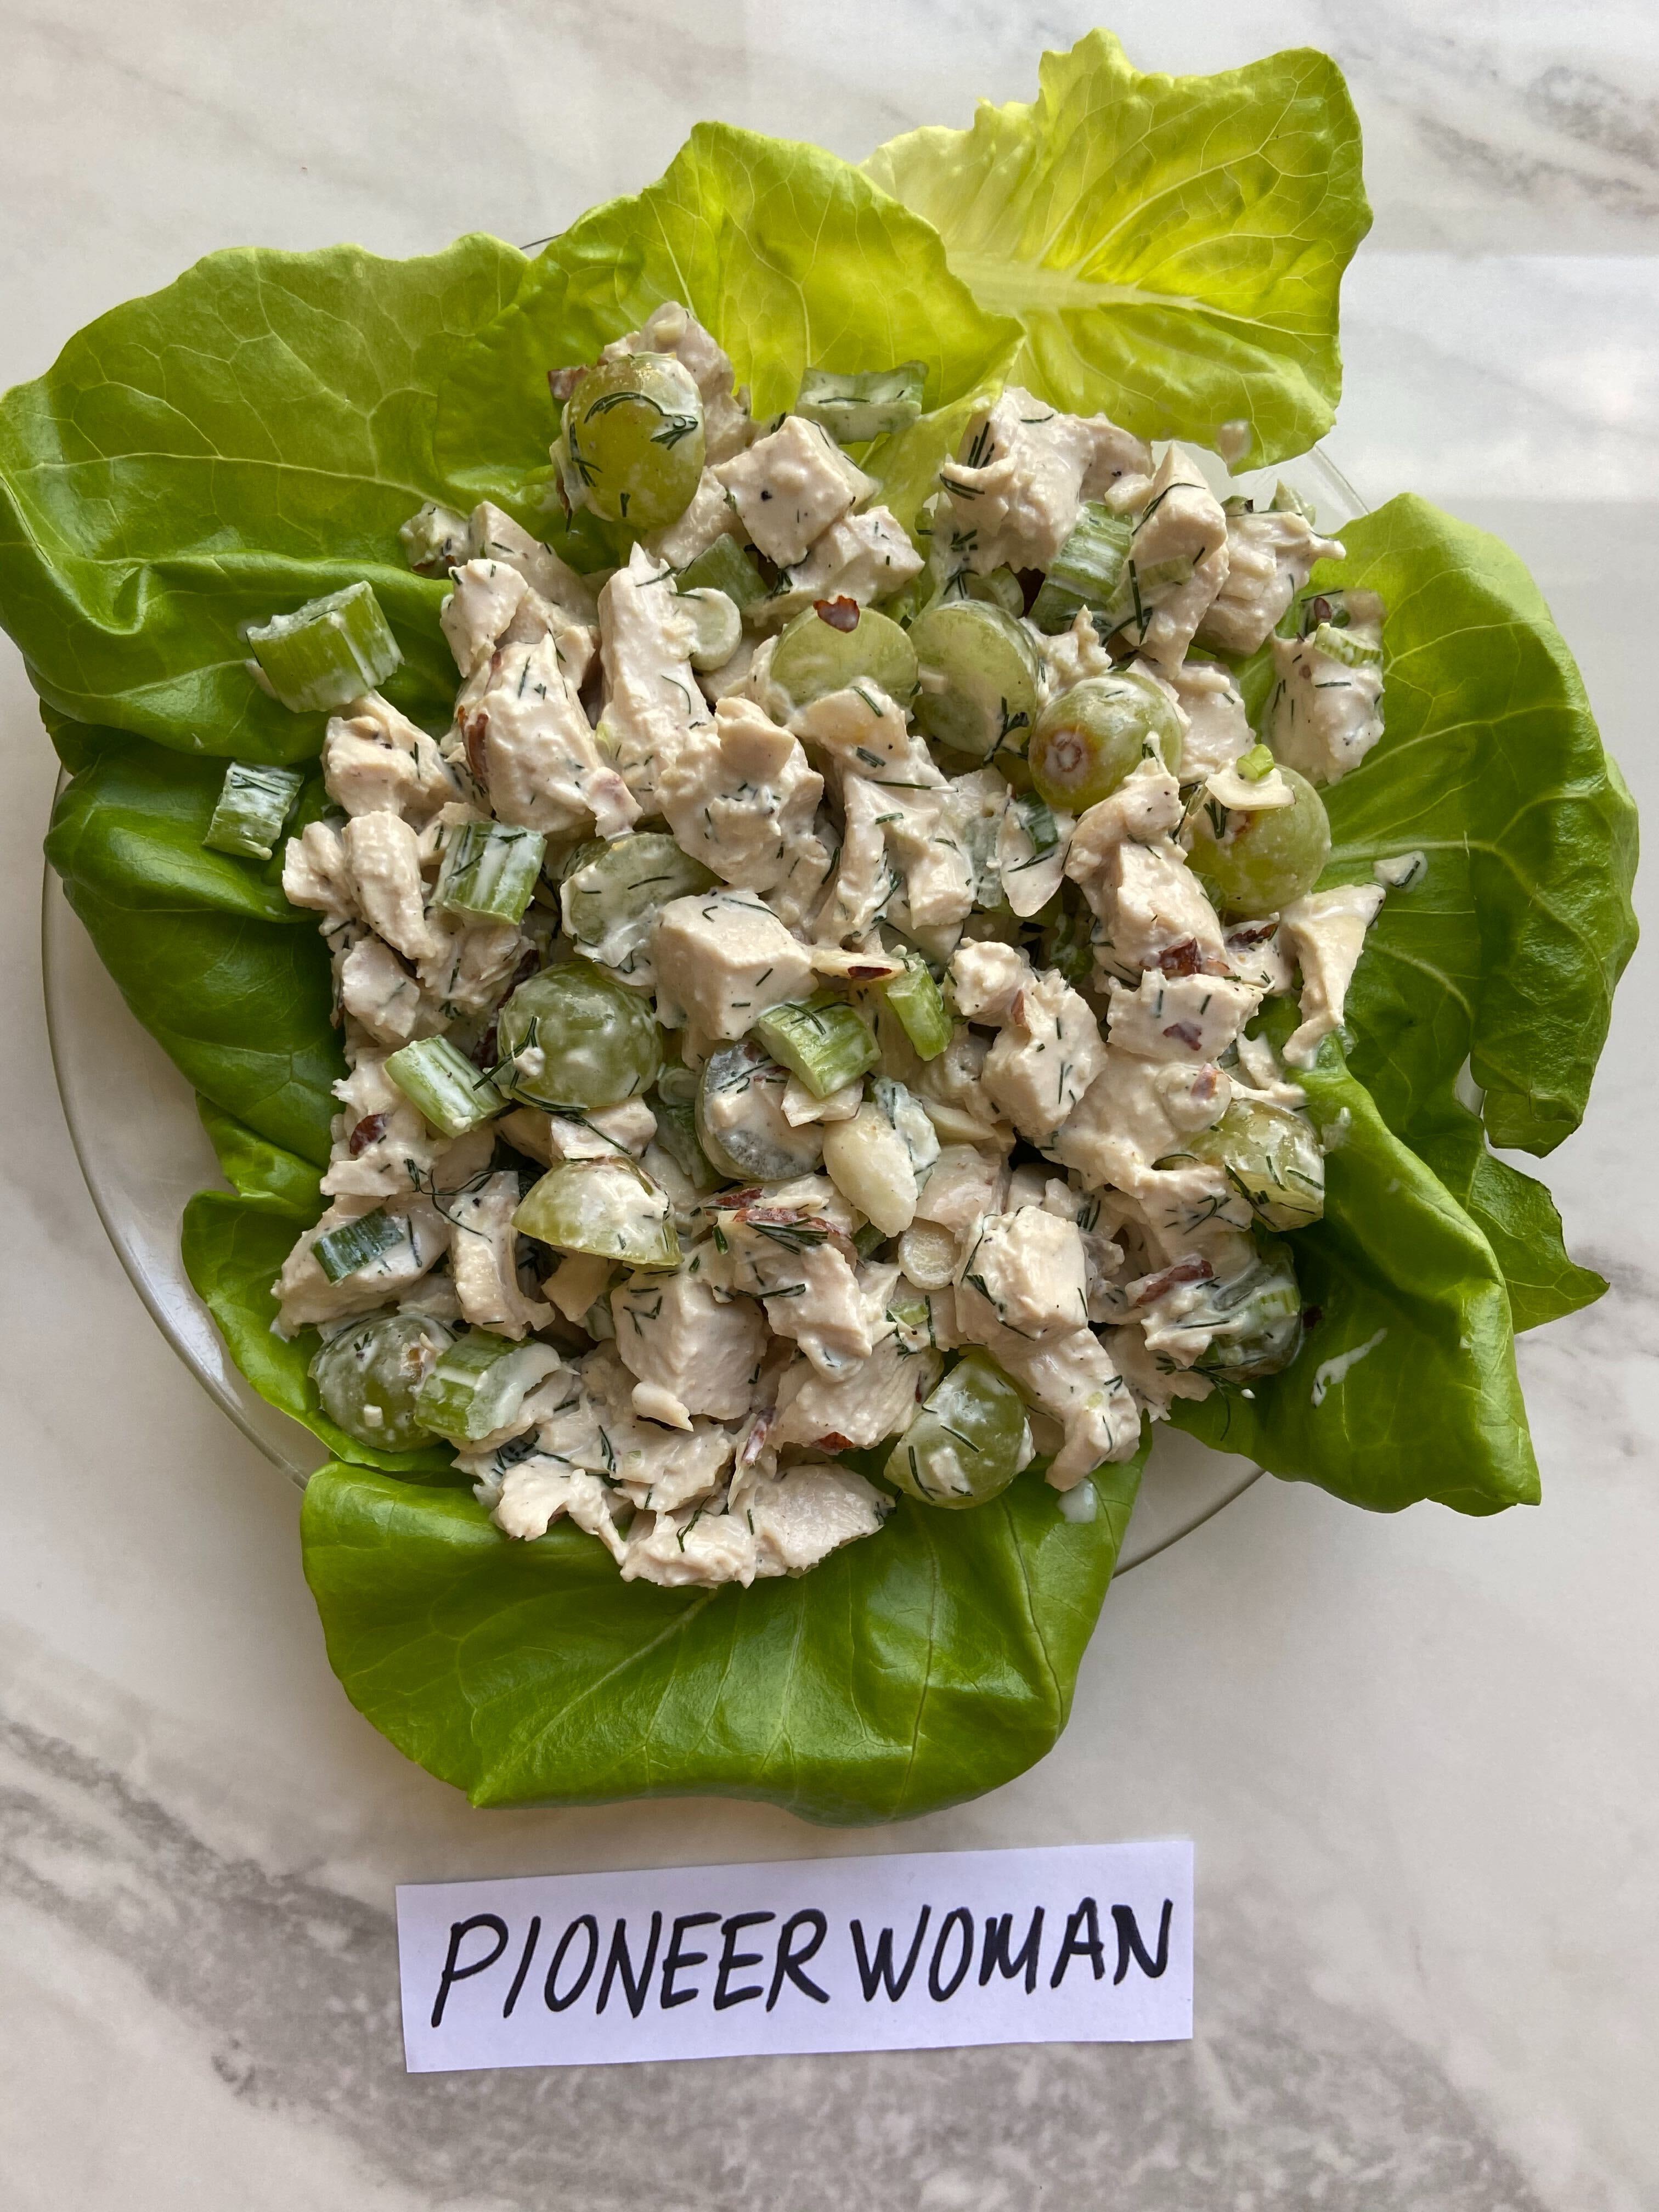 I Tried The Pioneer Chicken Salad Recipe | Kitchn